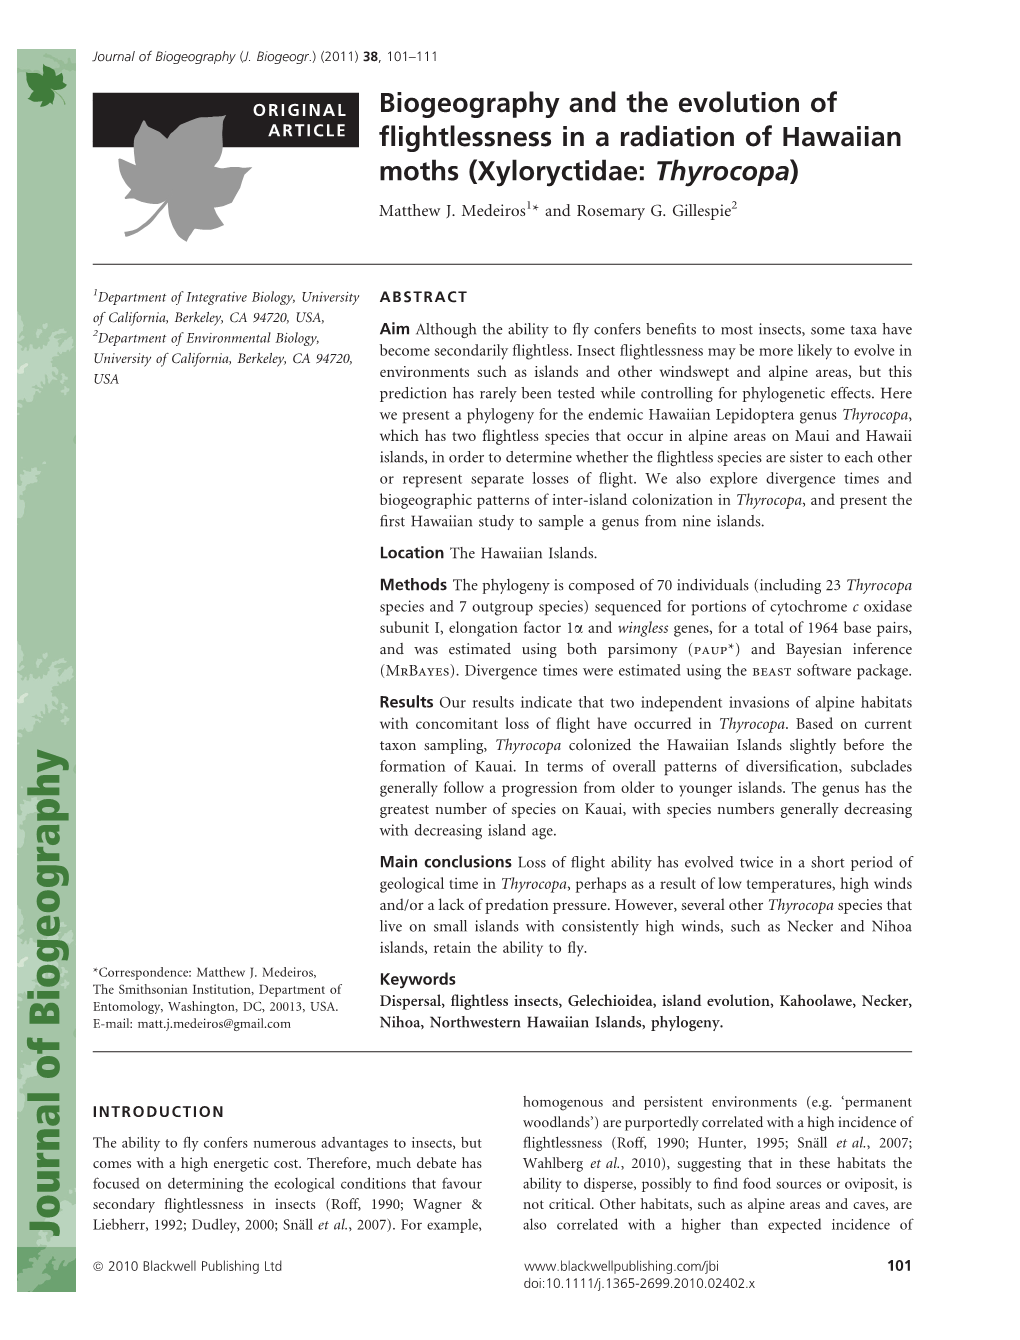 Biogeography and the Evolution of ARTICLE ﬂightlessness in a Radiation of Hawaiian Moths (Xyloryctidae: Thyrocopa) Matthew J